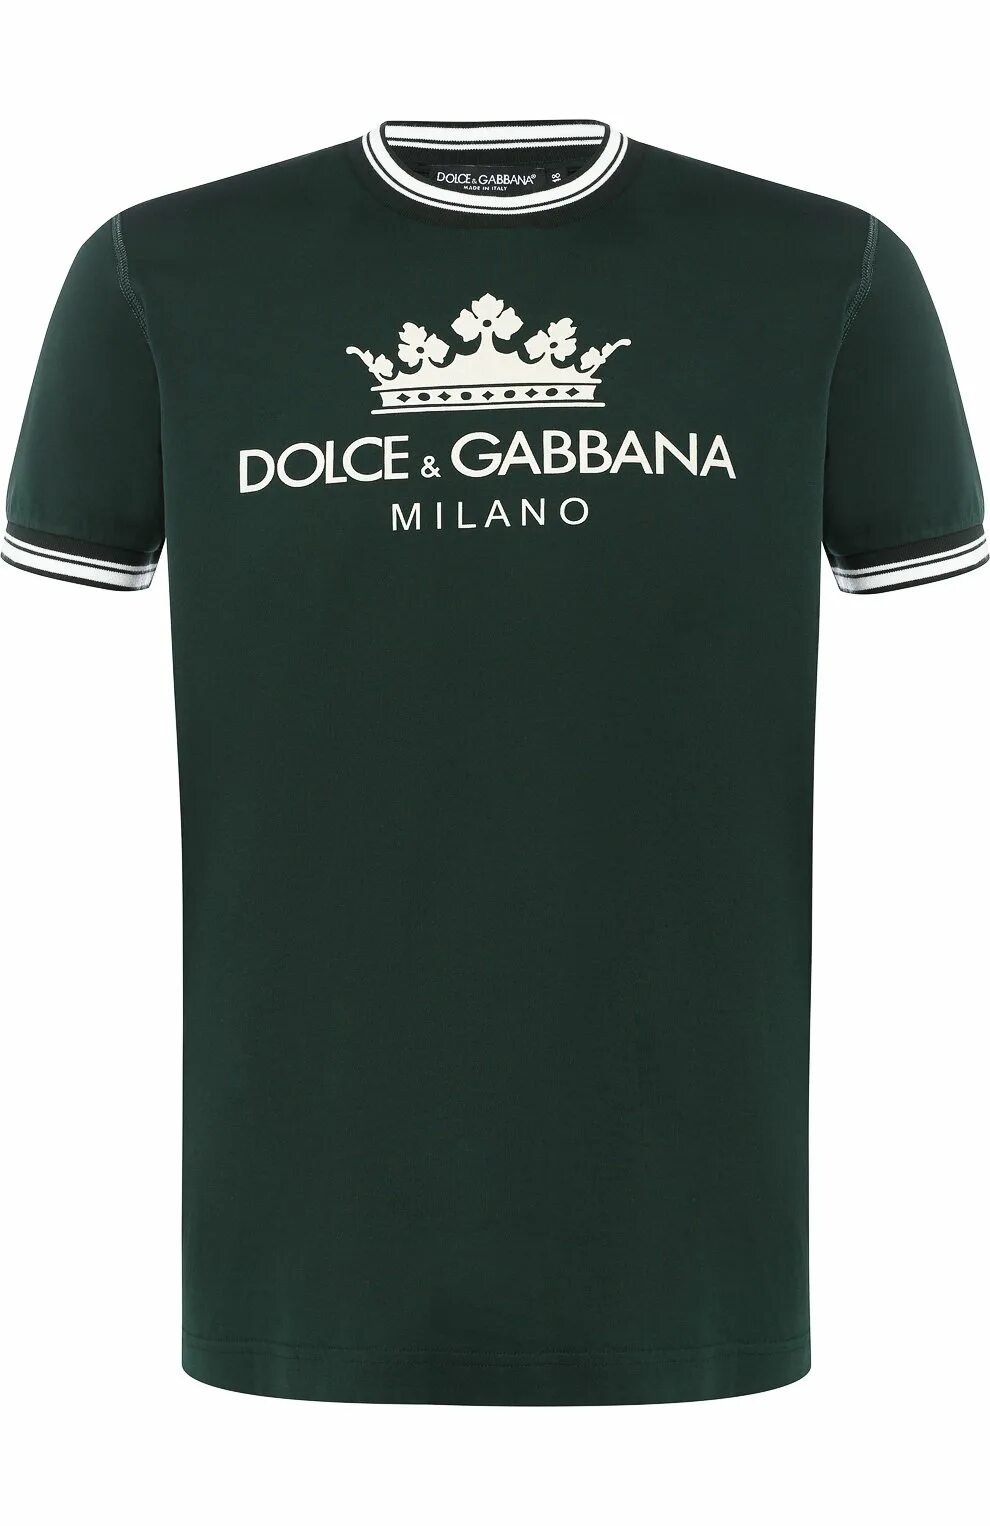 Dolce & Gabbana футболка зеленая мужская. Дольче Габбана футболка мужская зеленая. Dolce Gabbana Milano Italia футболка. Футболка Дольче Габбана зеленая.